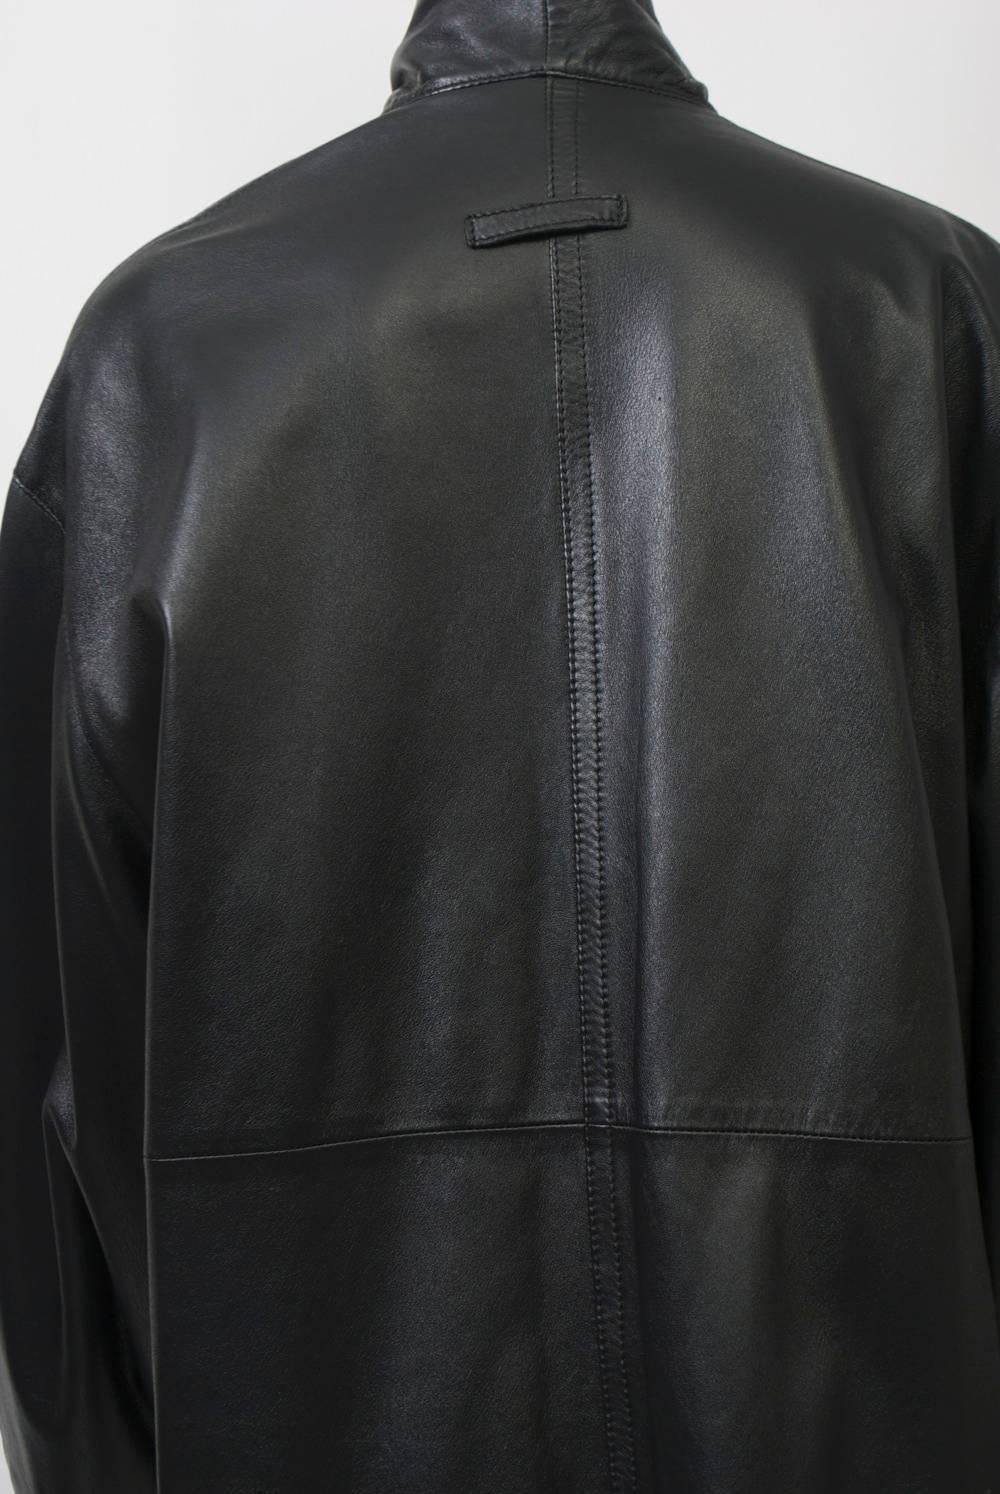 Gaultier Black Leather Coat 2